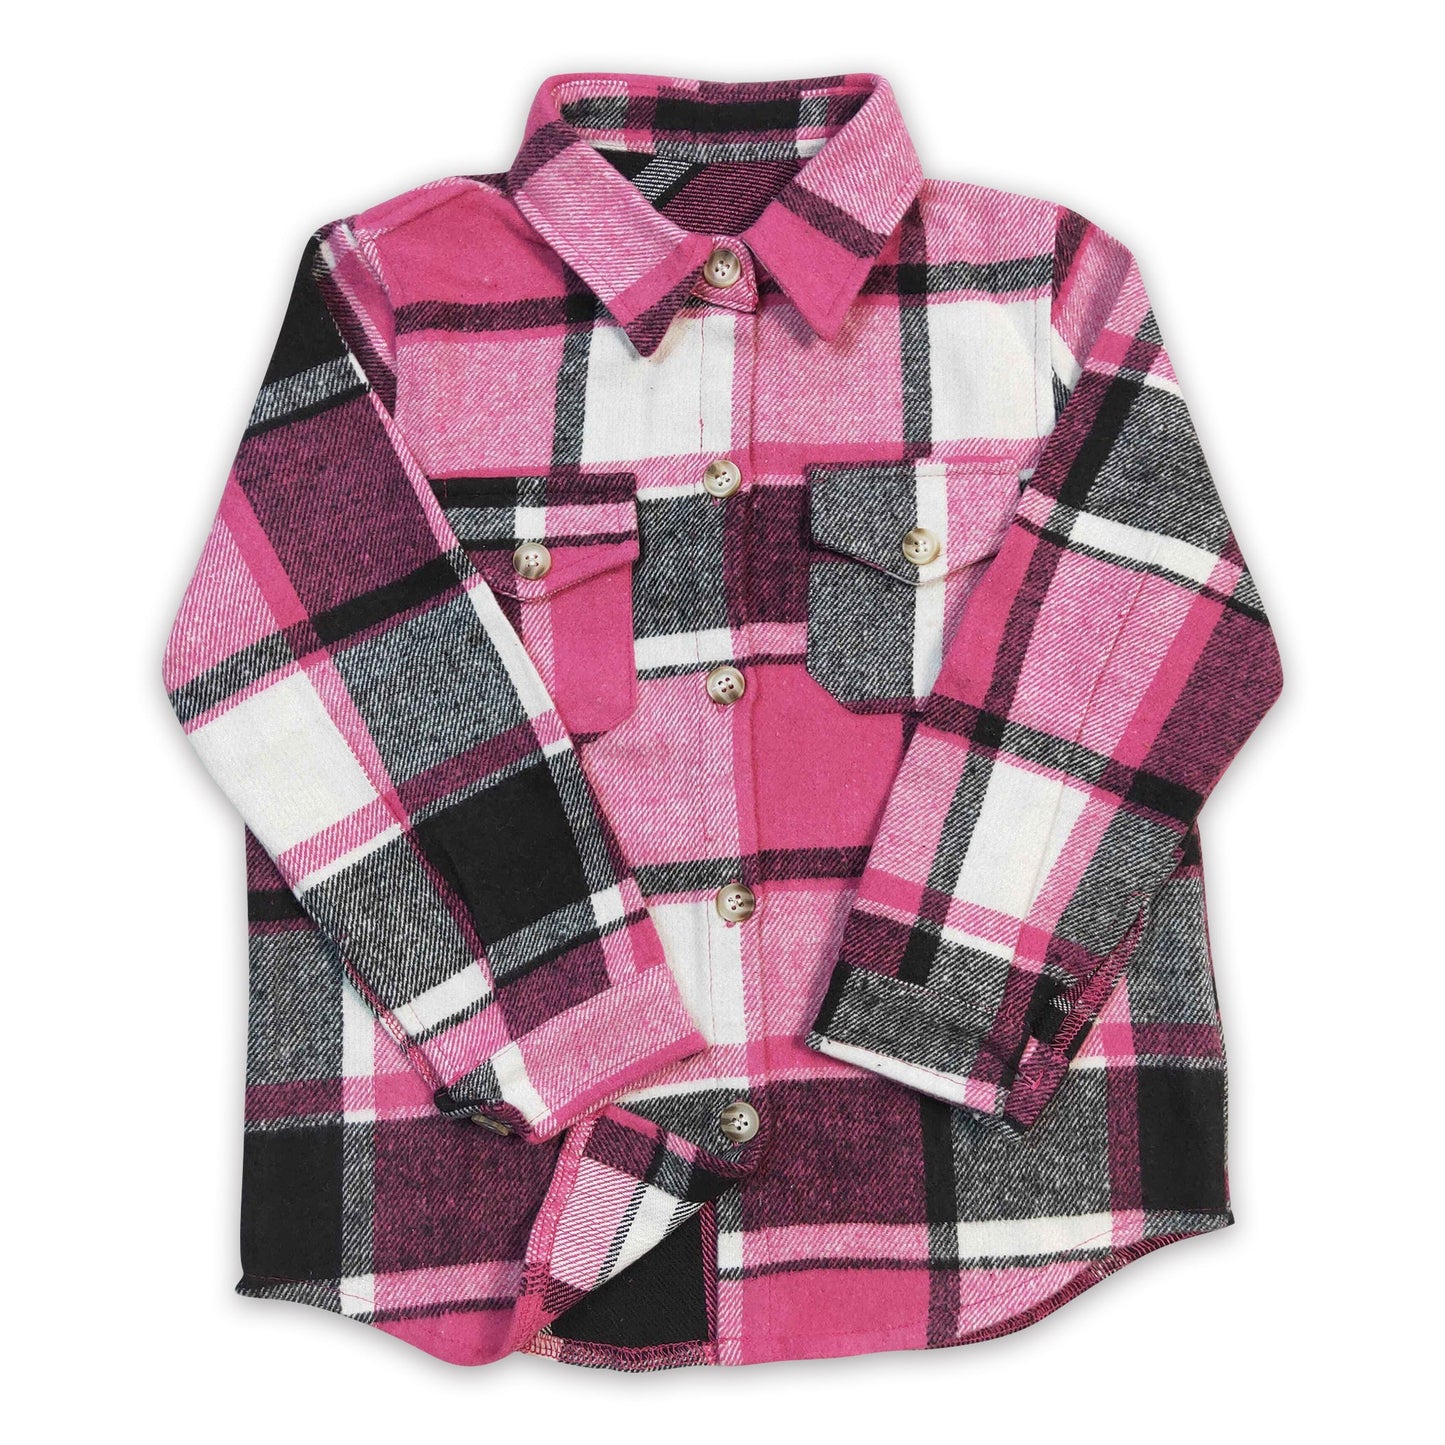 Hot Pink plaid cotton pockets baby girls Valentine's flannel button up shirt